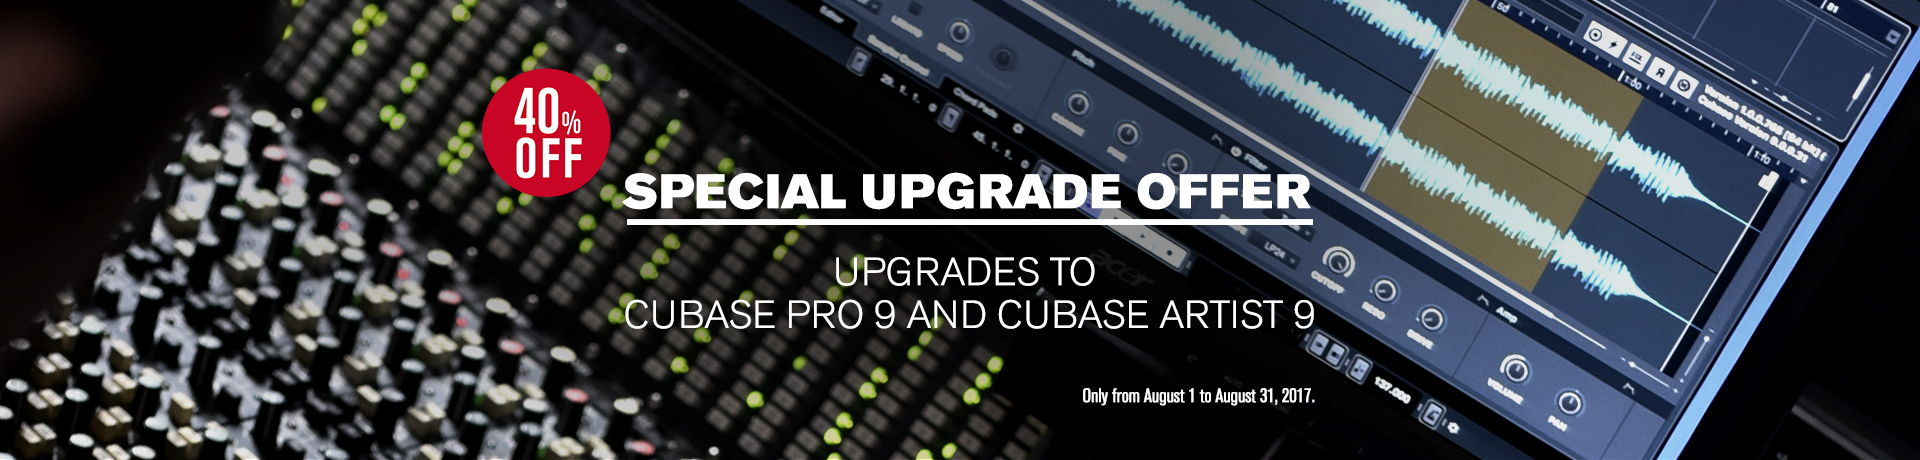 cubase-special-upgrade-offer-en-home-1920x460.jpg